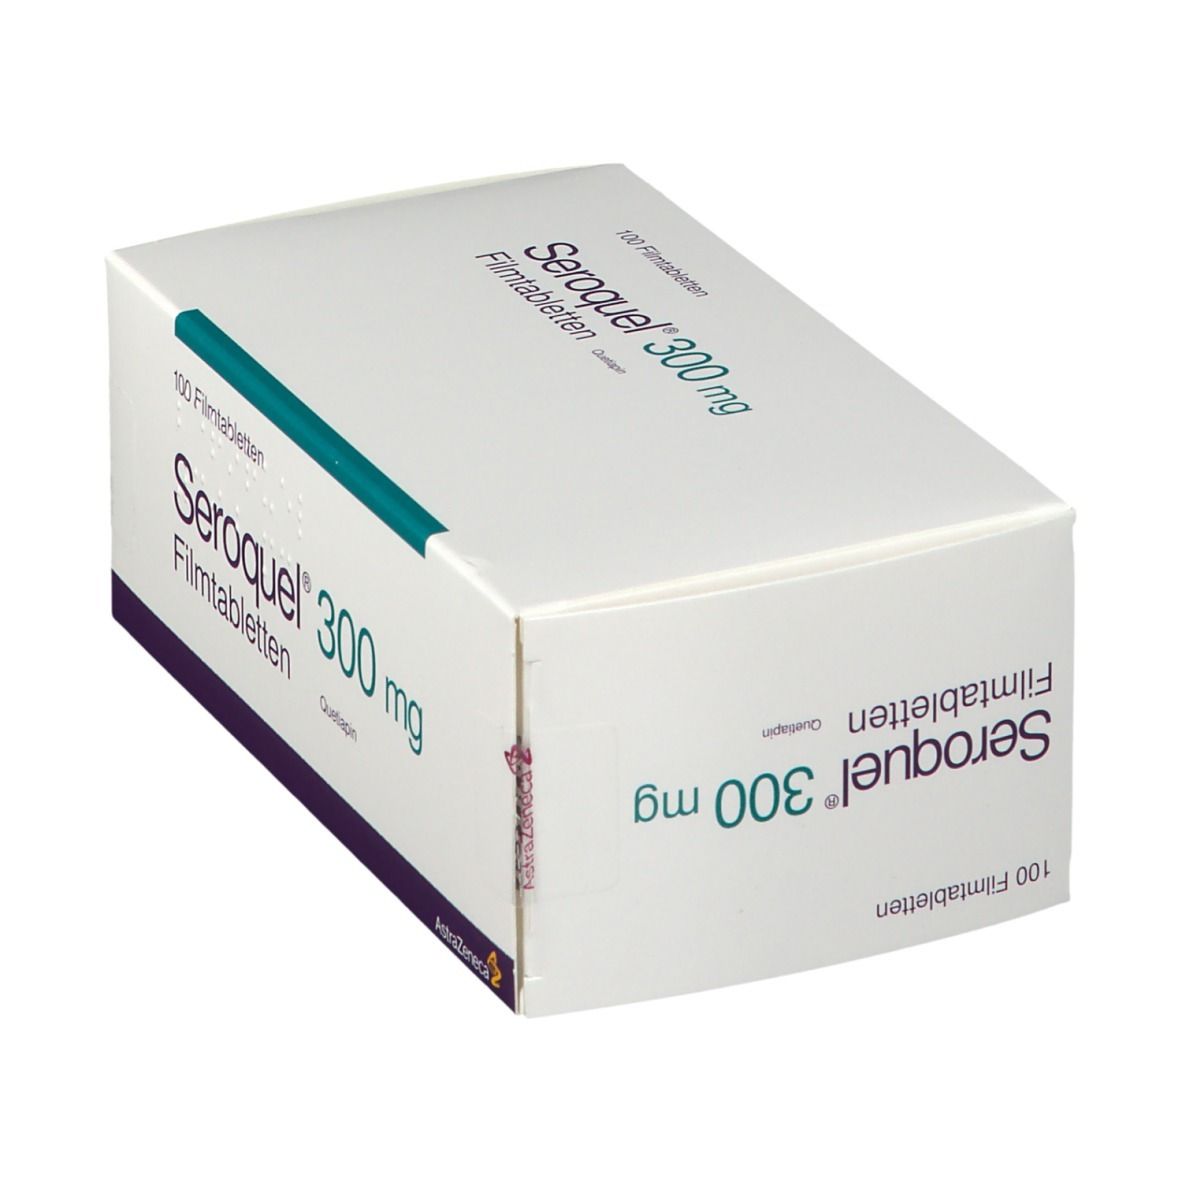 Seroquel® 300  mg